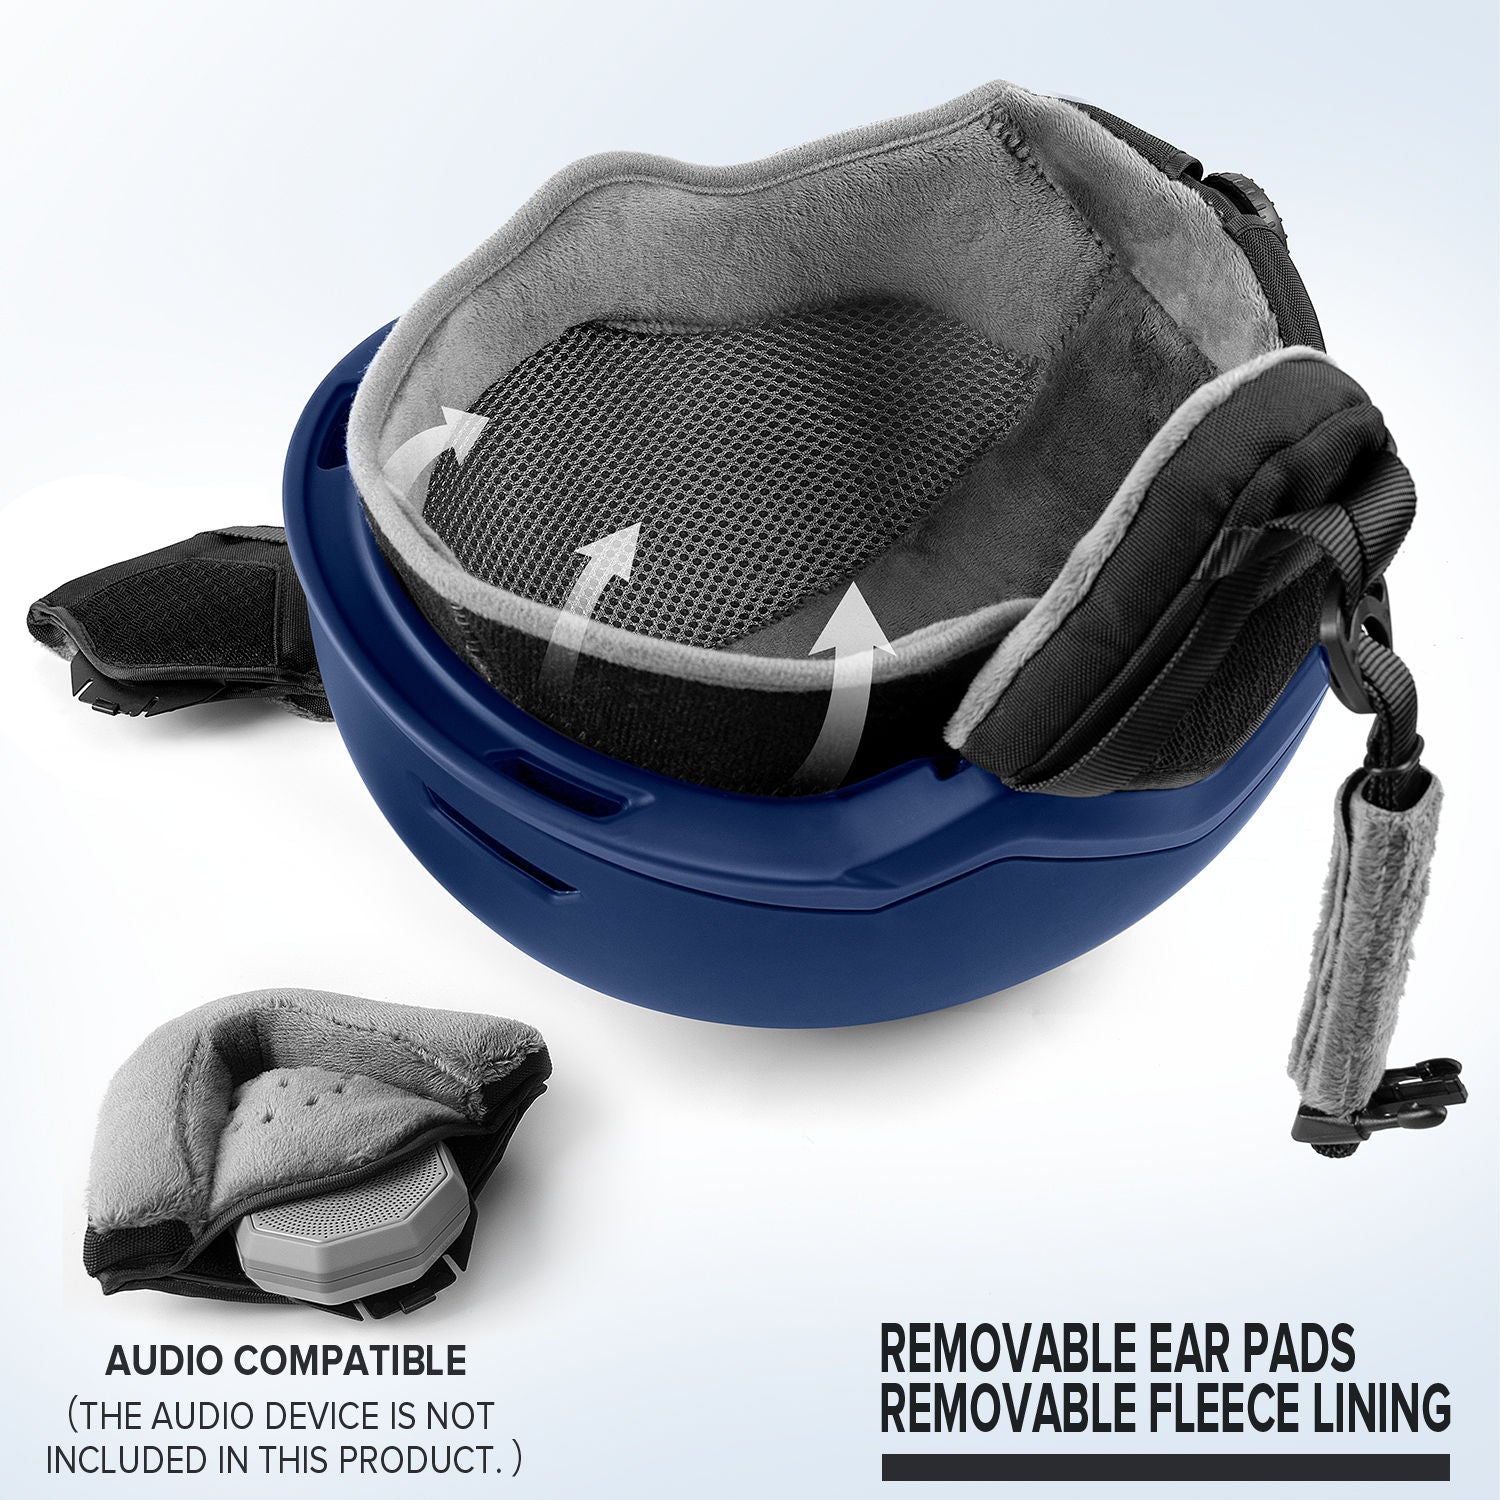 azure blue ski helmet with audio compatible ear pads